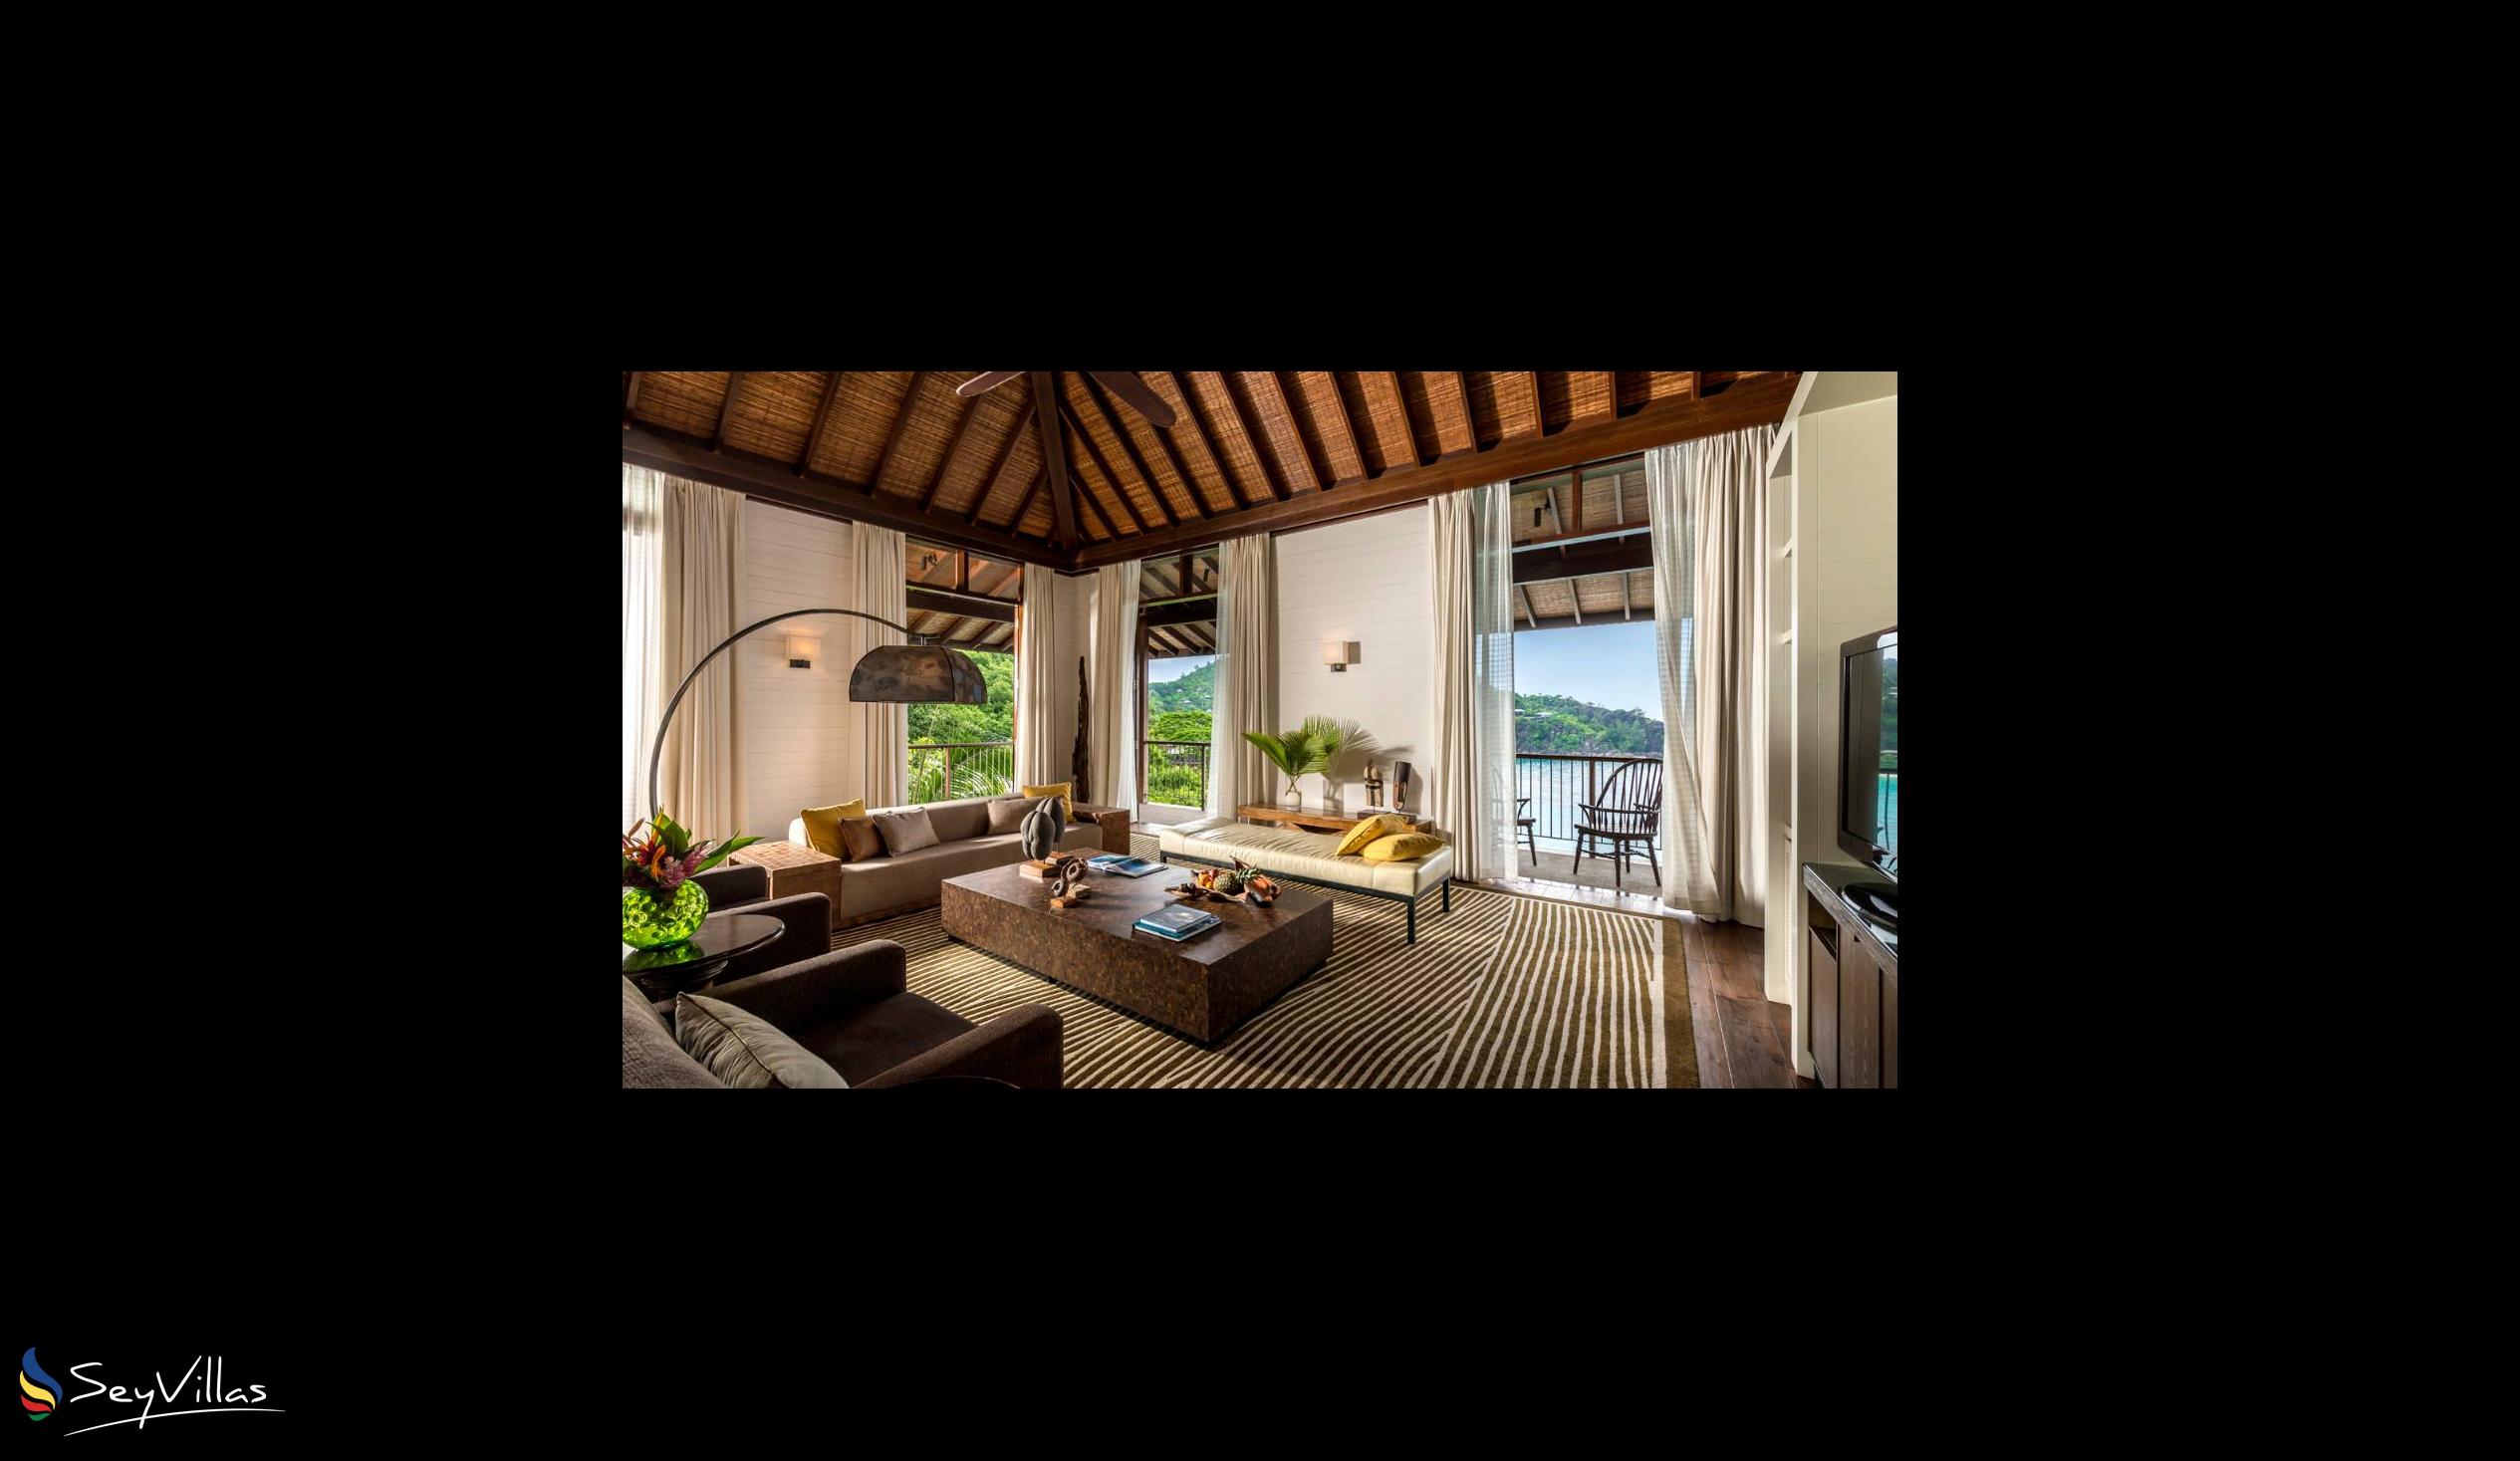 Photo 67: Four Seasons Resort - 4-Bedroom Residence Villa - Mahé (Seychelles)